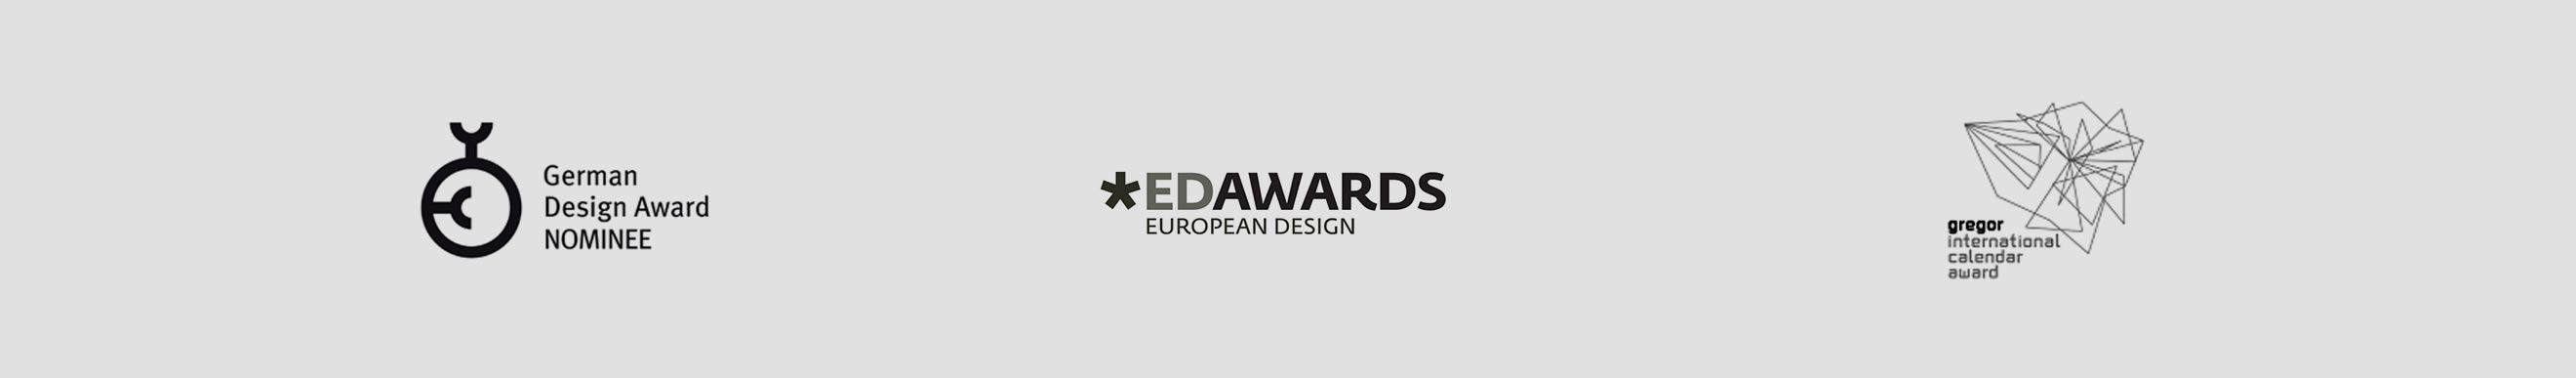 Soka Awards, German Design Award Nominee, European Design Award, gregor international calendar award